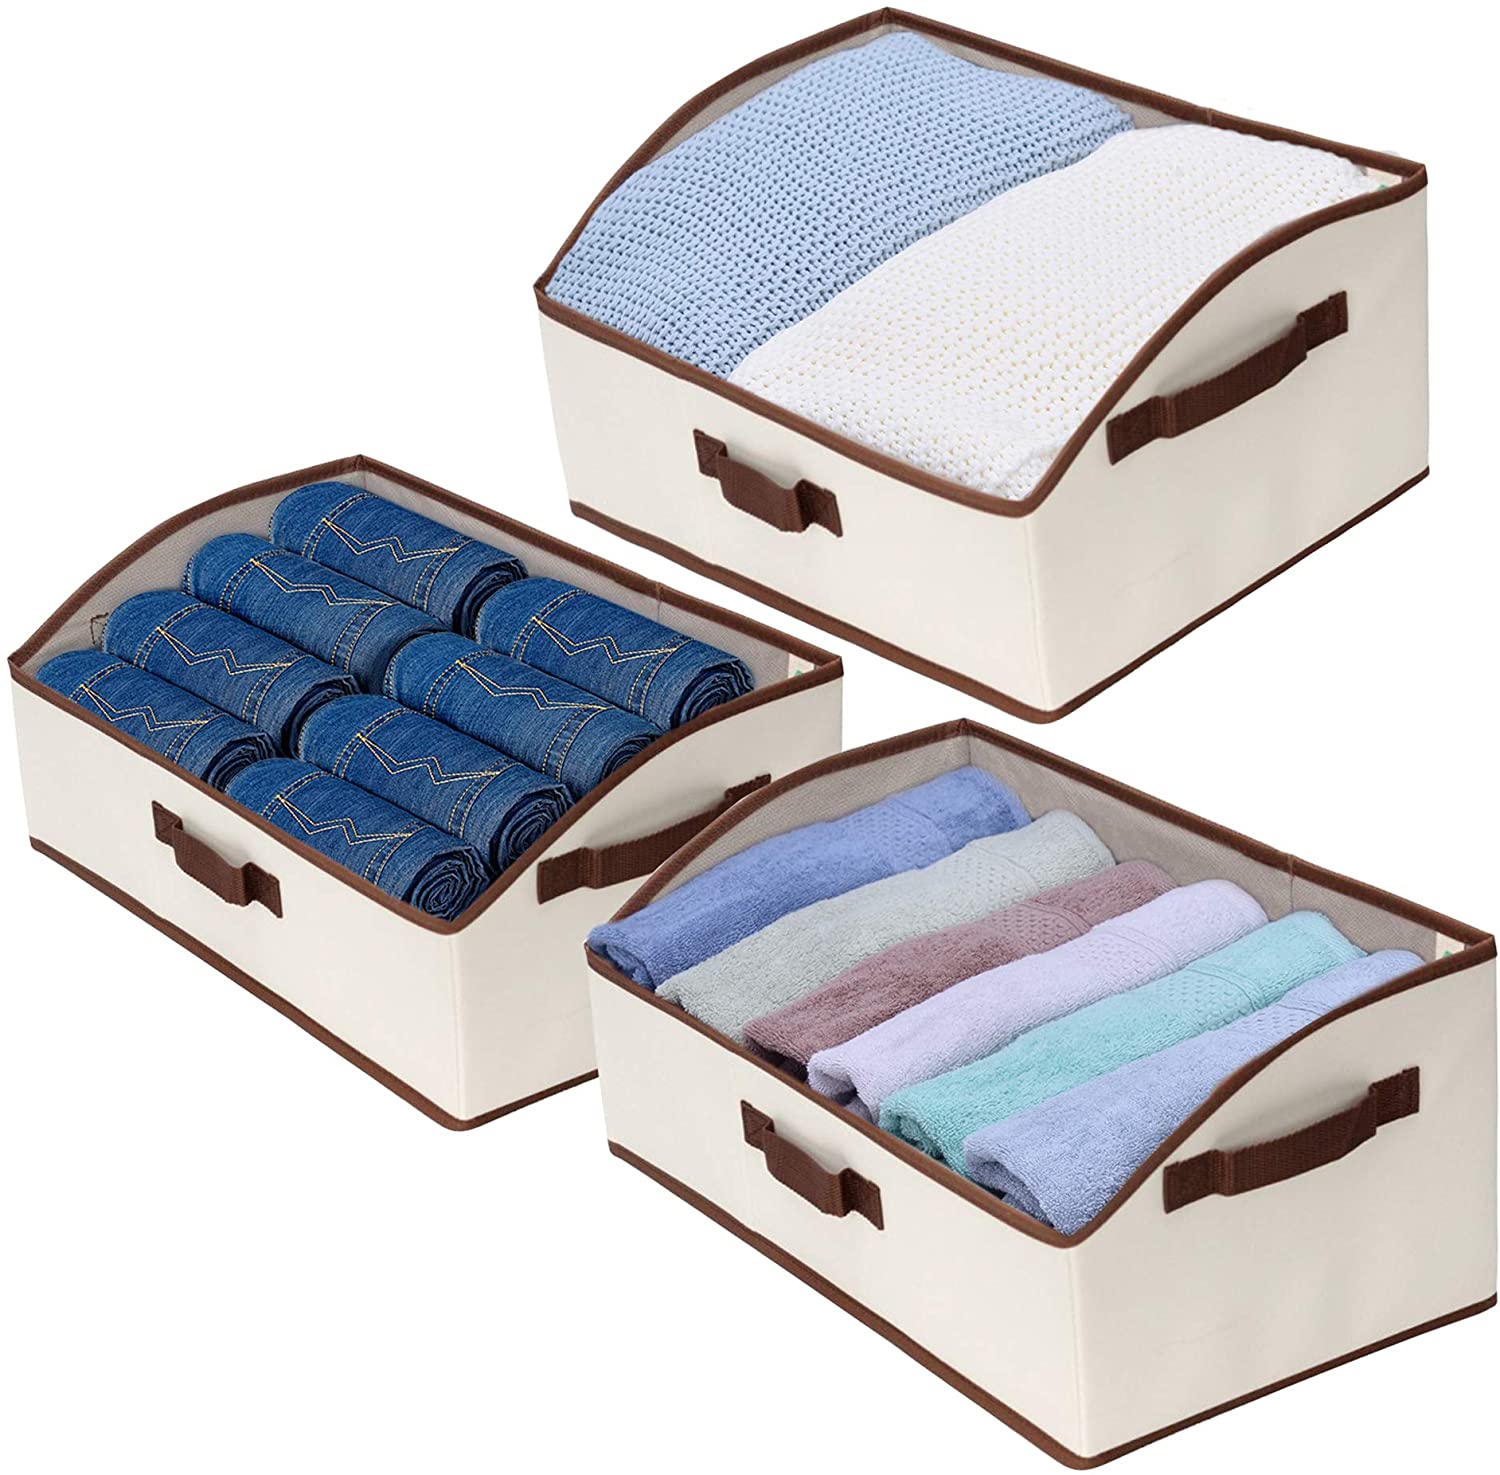 Foldable Details about   StorageWorks Closet Baskets Cotton Fabric Baskets for Closet Shelves 